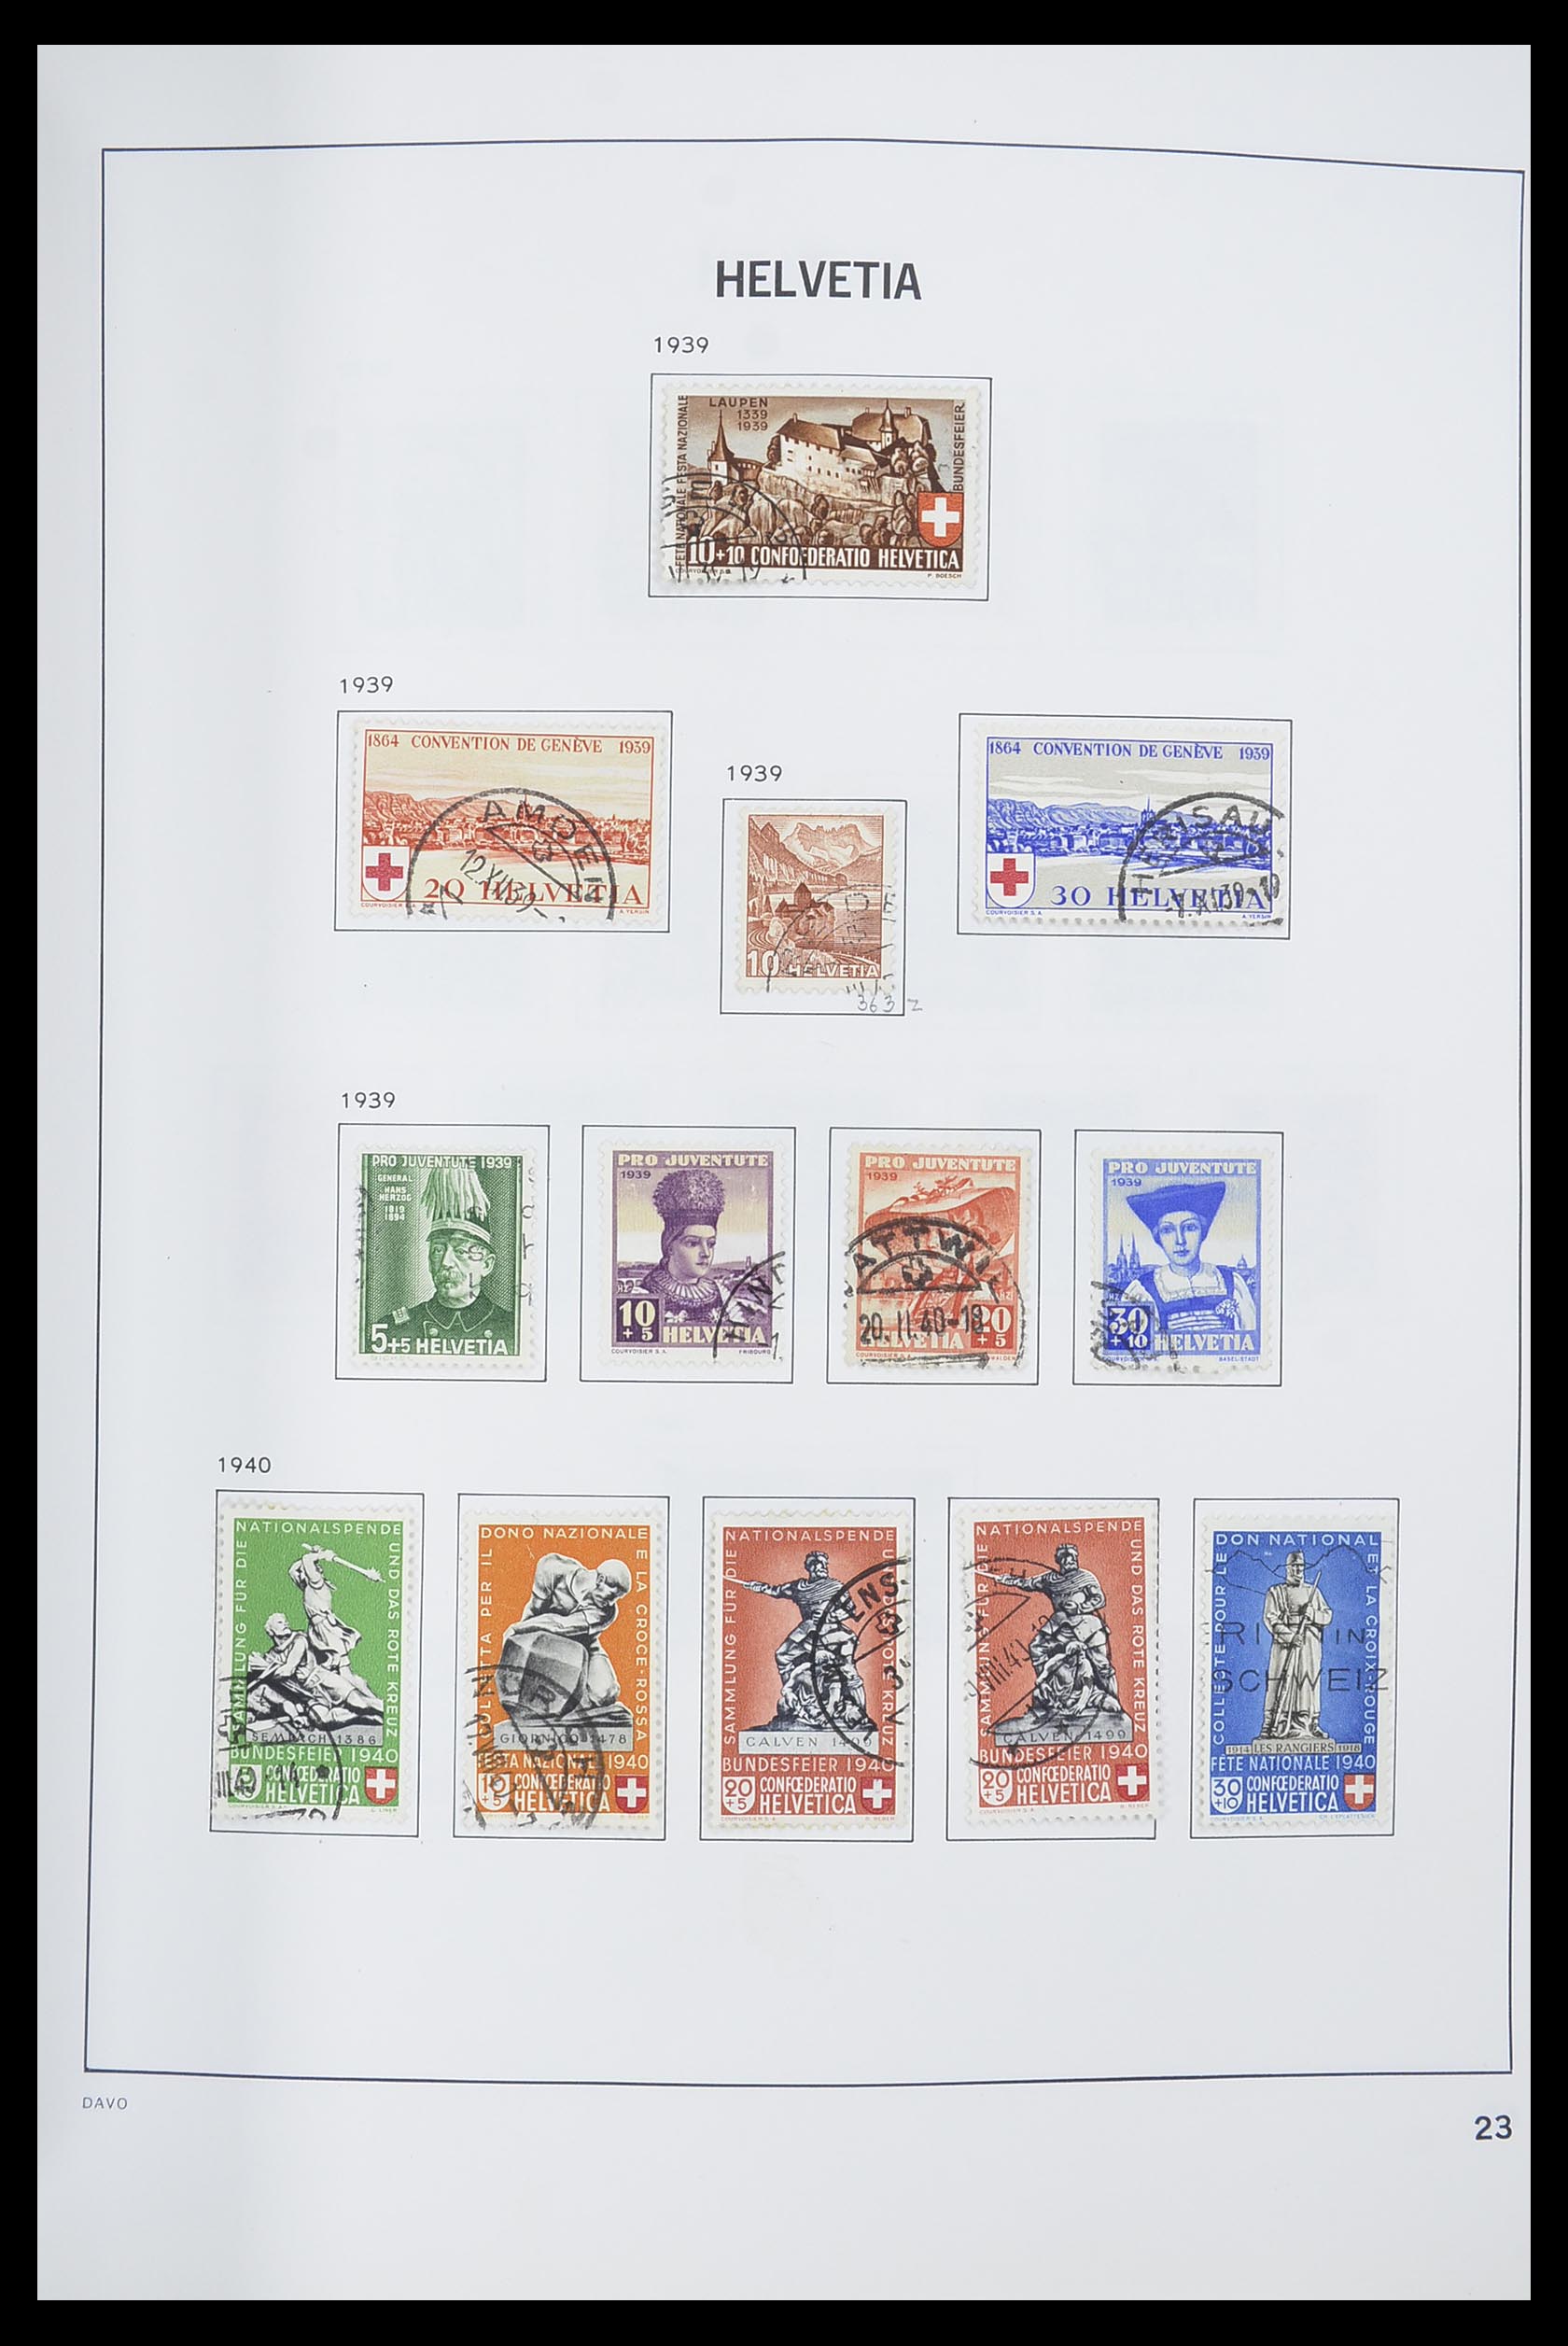 33559 024 - Stamp collection 33559 Switzerland 1850-2000.